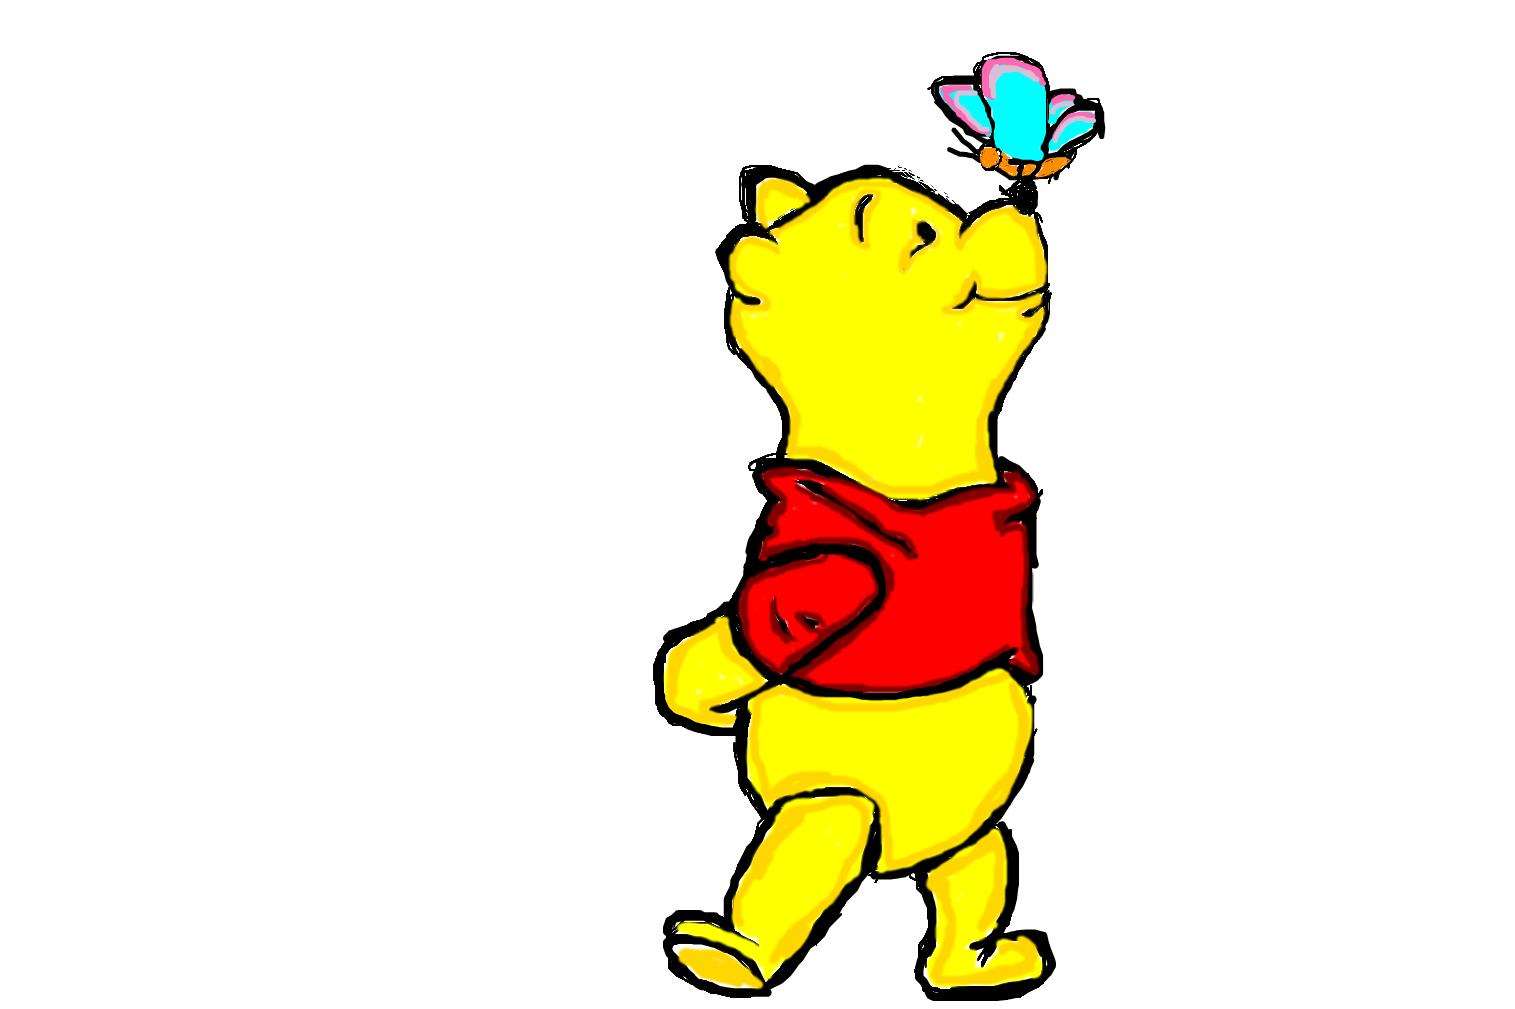 We all love Winnie the Pooh